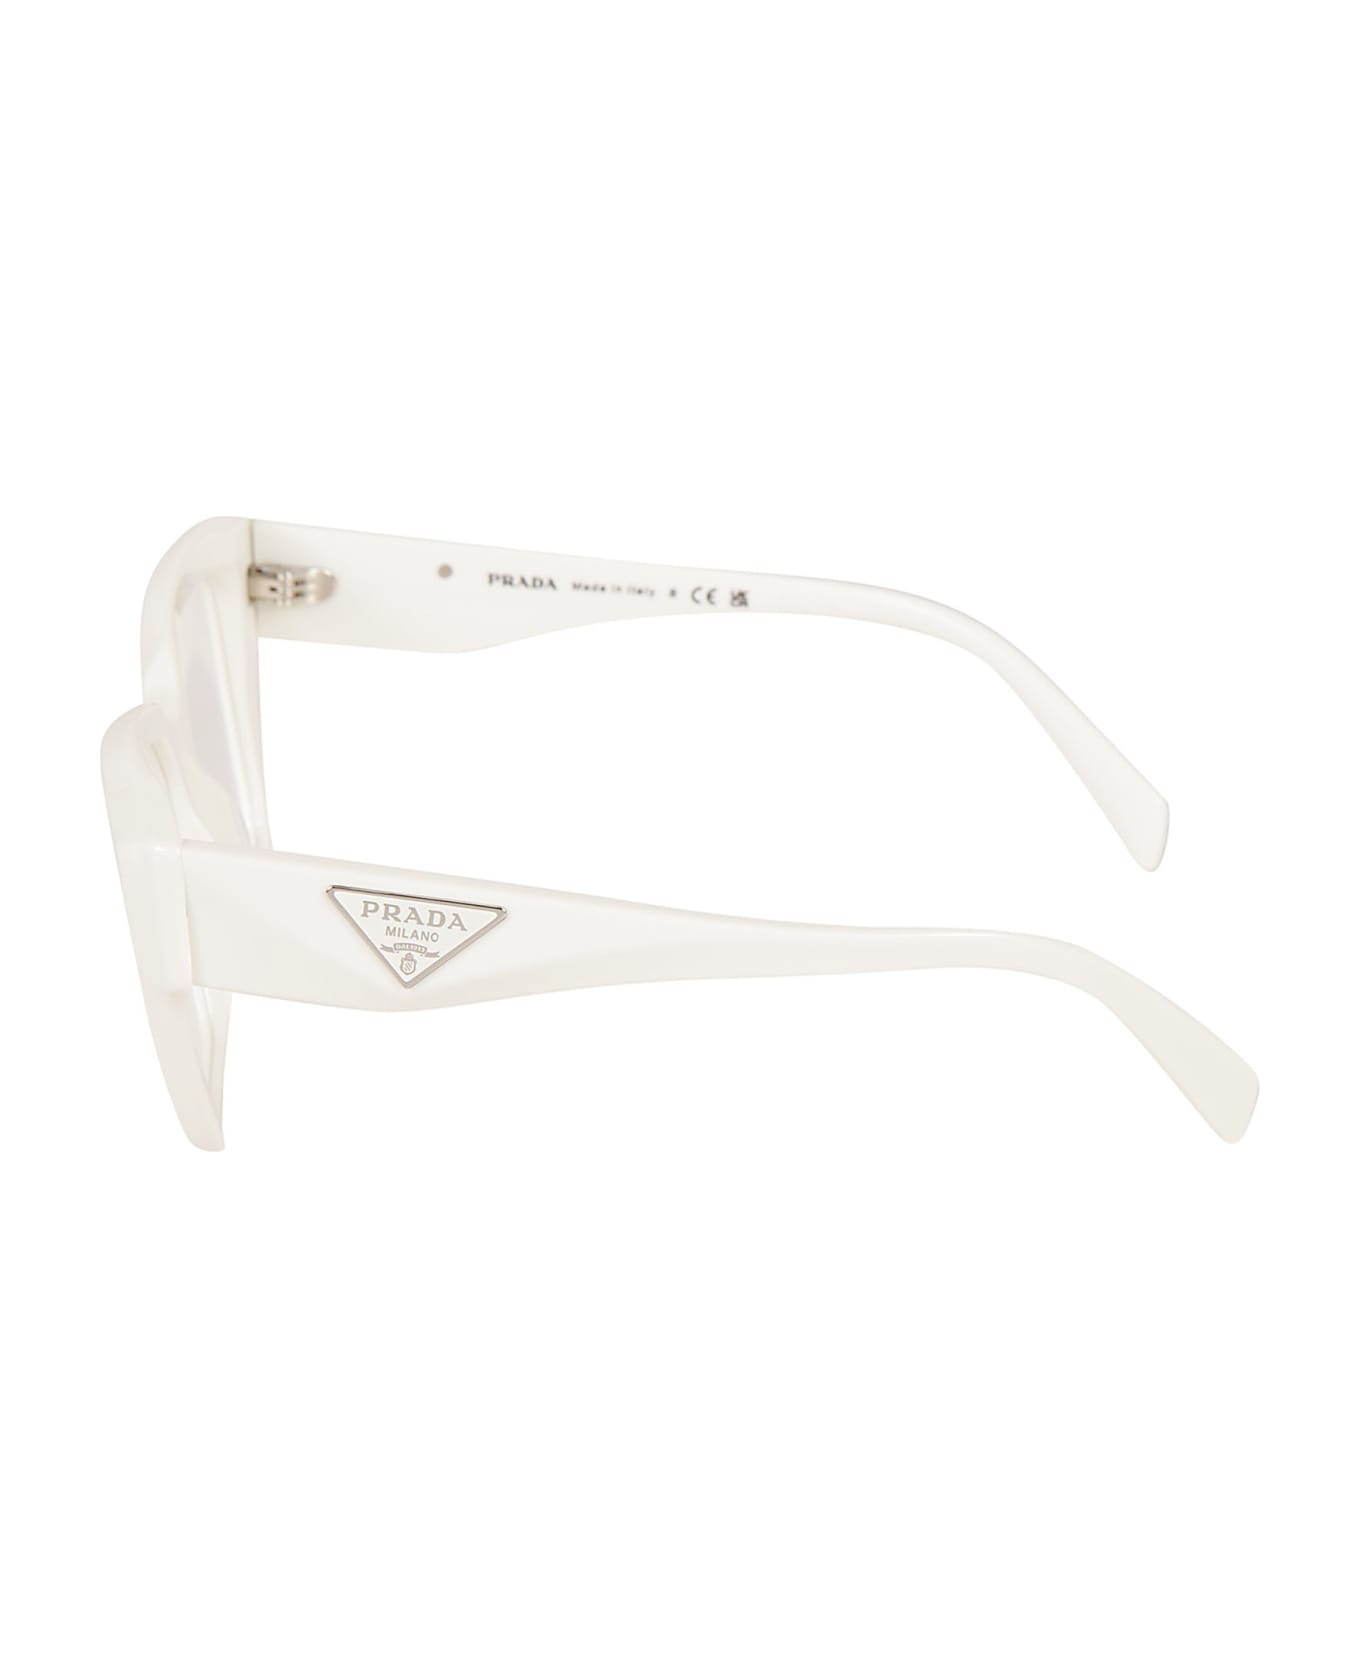 Prada Eyewear Vista Frame - 1421O1